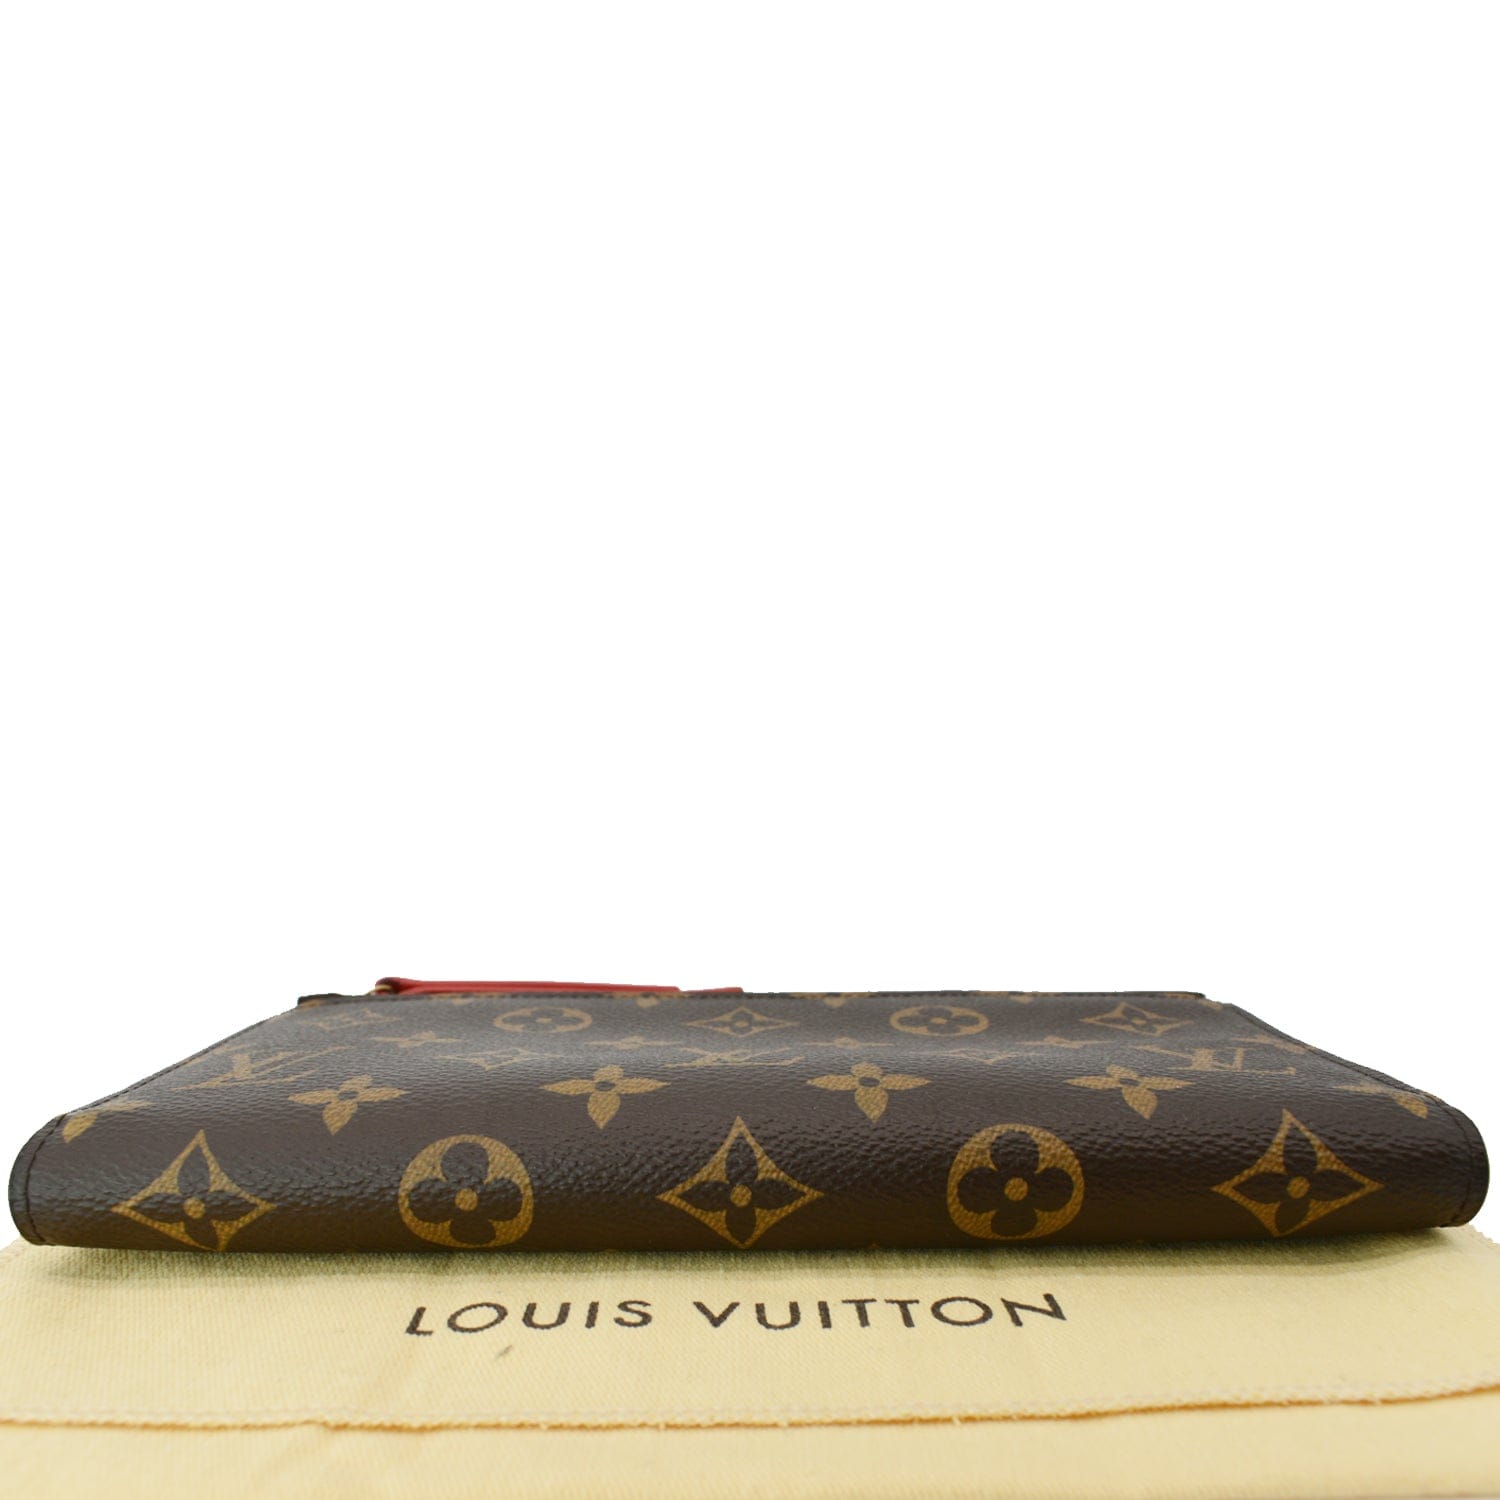 Louis Vuitton Adele Compact n Adele wallets ❤❤❤